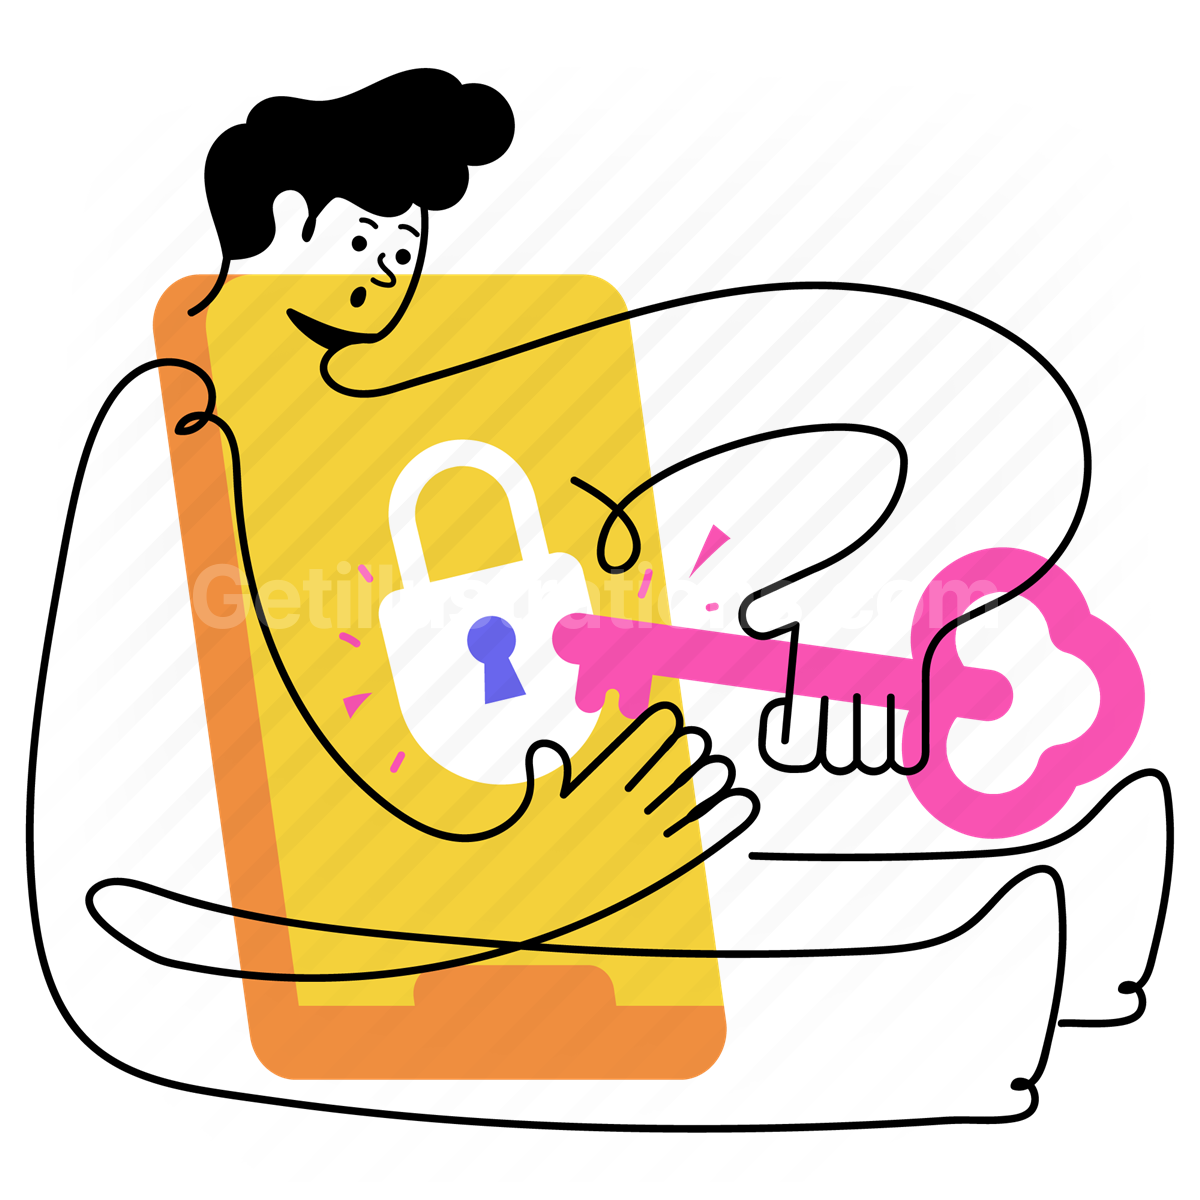 User Account illustration